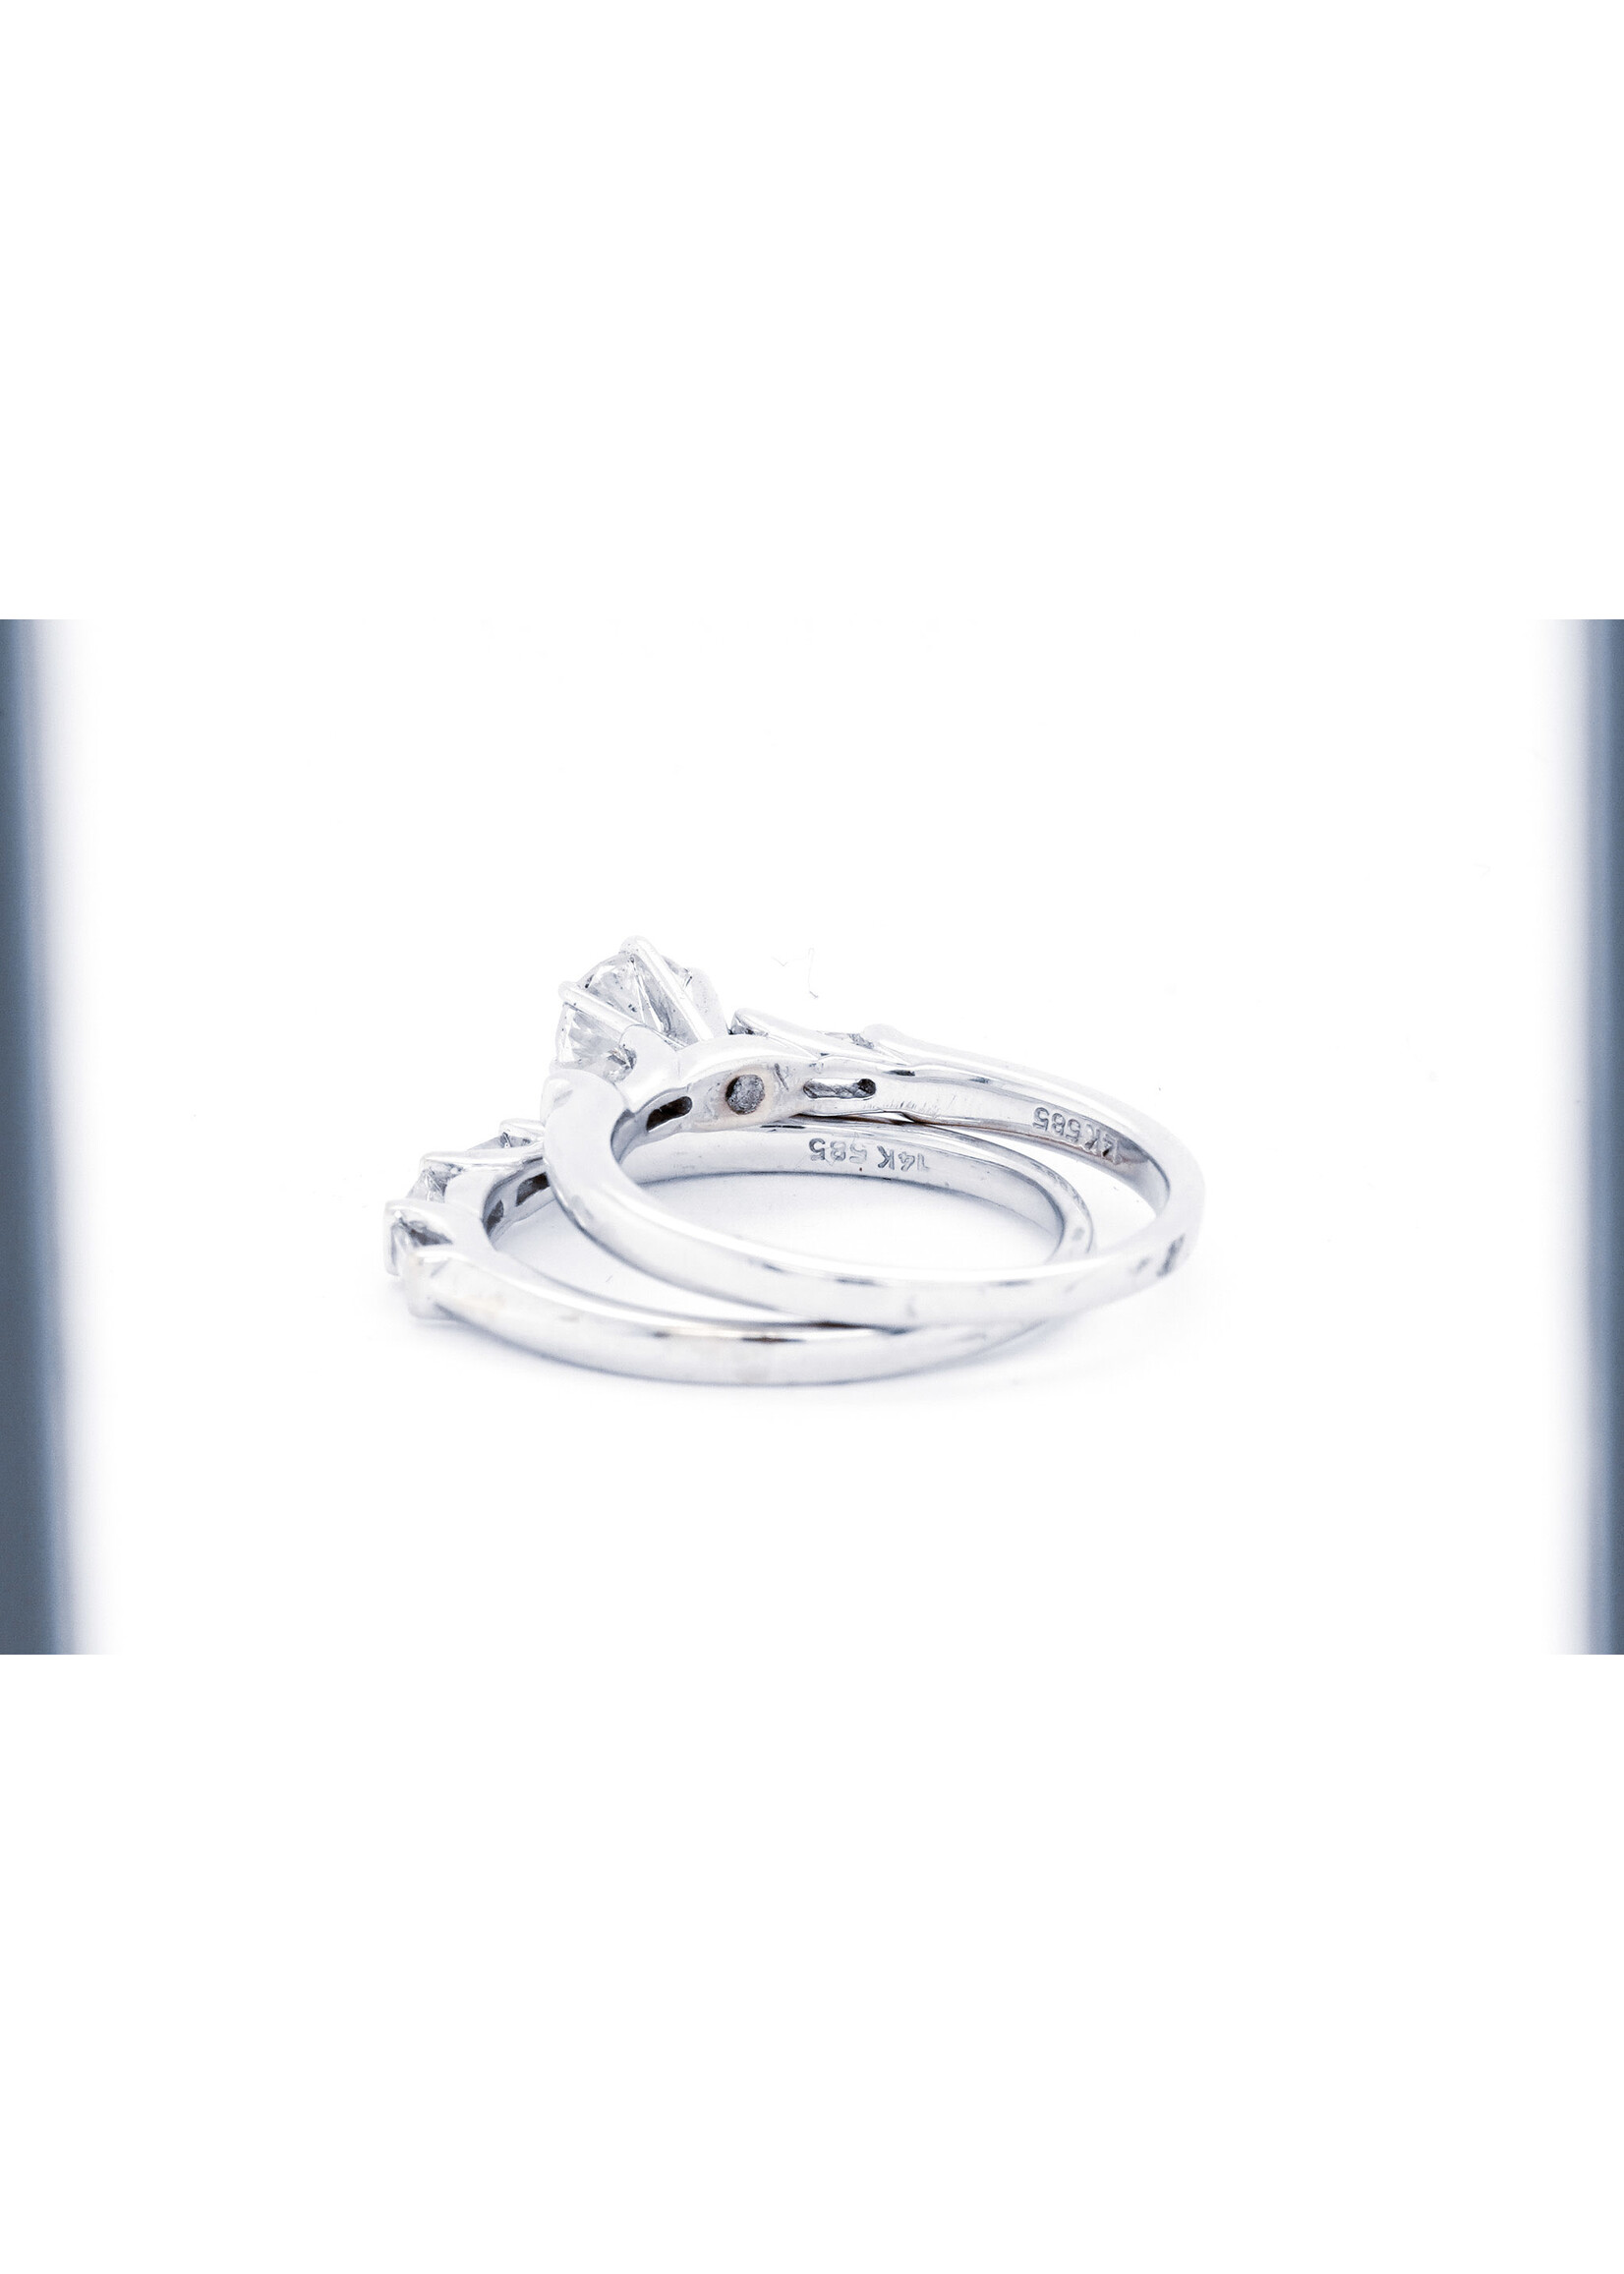 14KW 5.8g 1.00ctw (.64ctr) Diamond Engagement Ring (size 7.5)